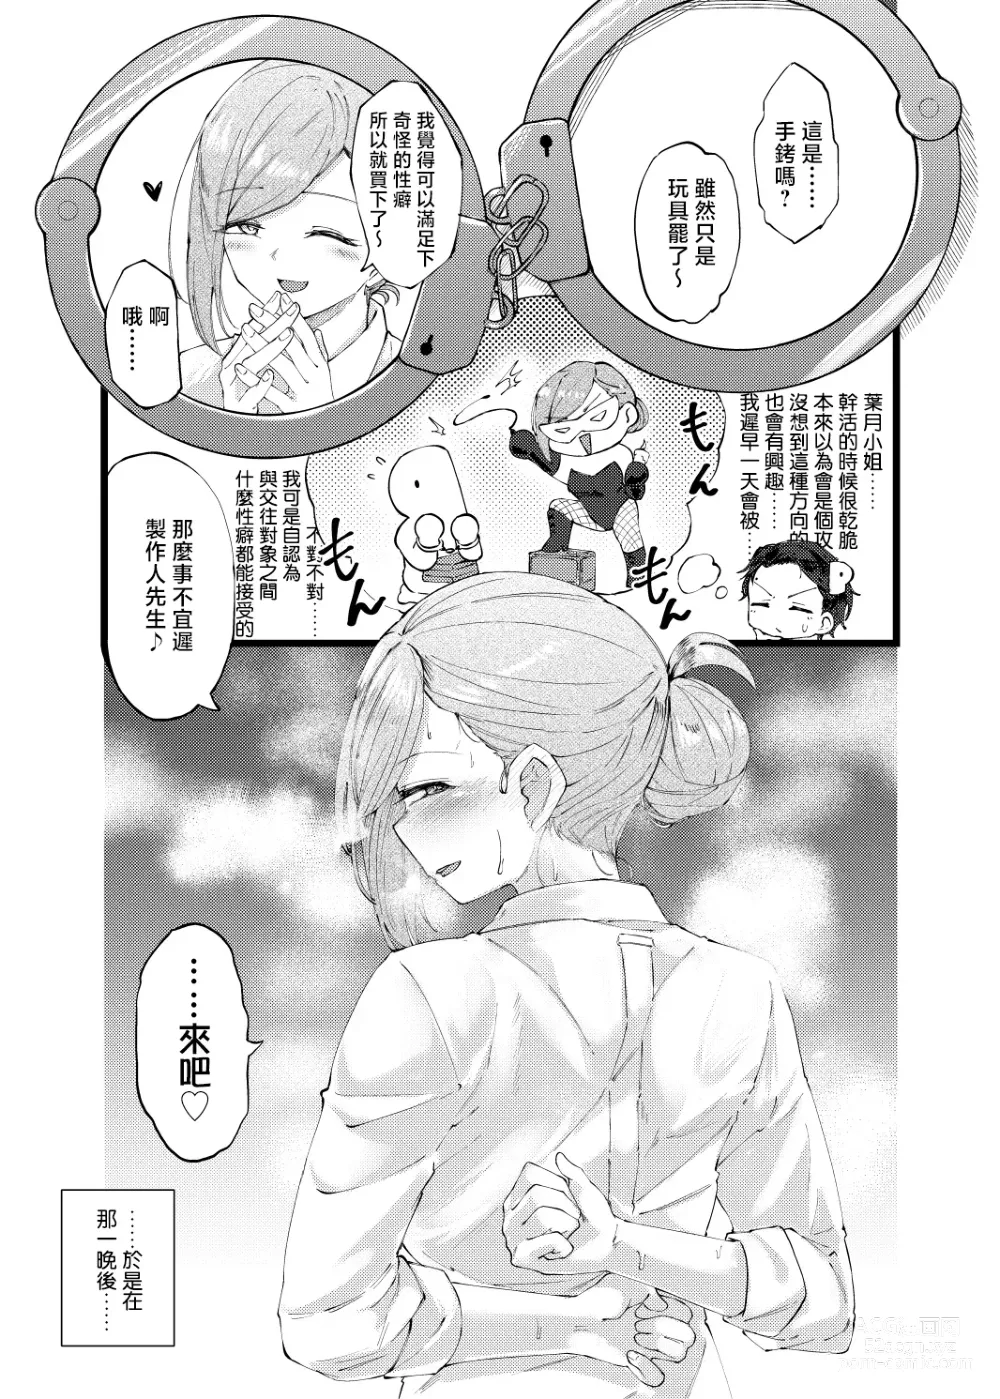 Page 3 of doujinshi 你就是喜欢这种PLAY吗？